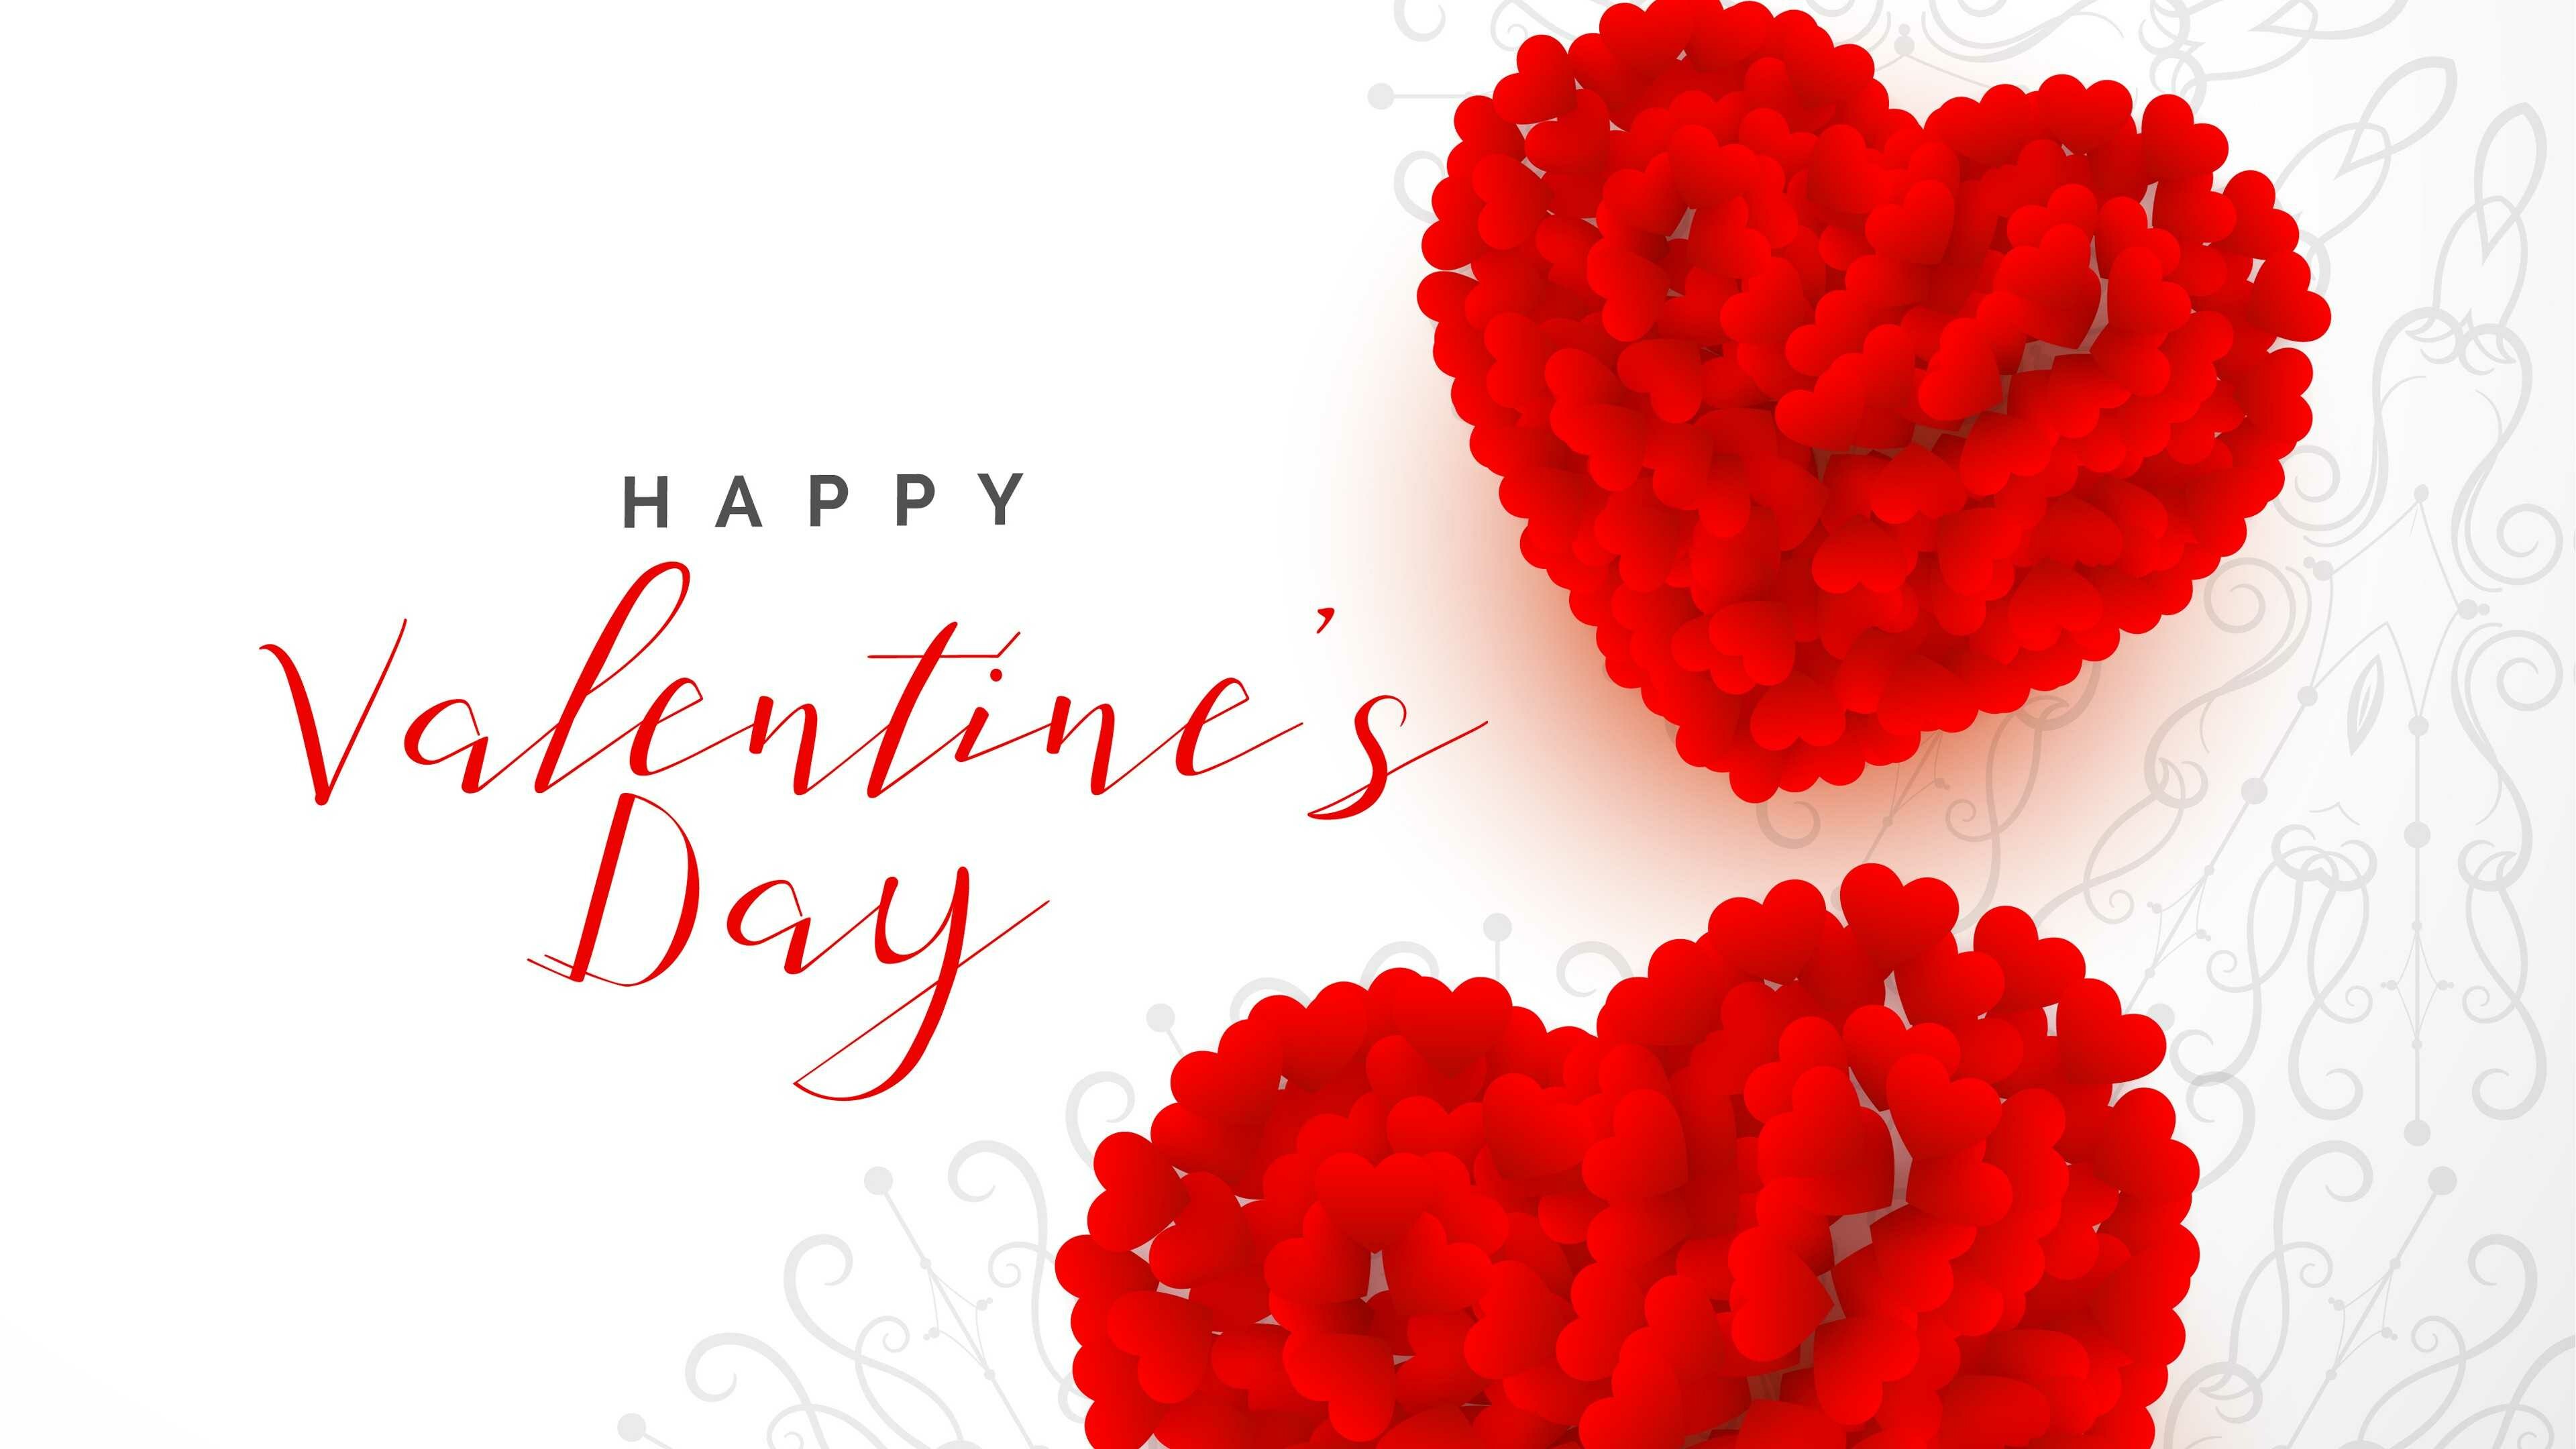 Valentine's Day: Festive activity, Romance, Greeting card. 3840x2160 4K Background.